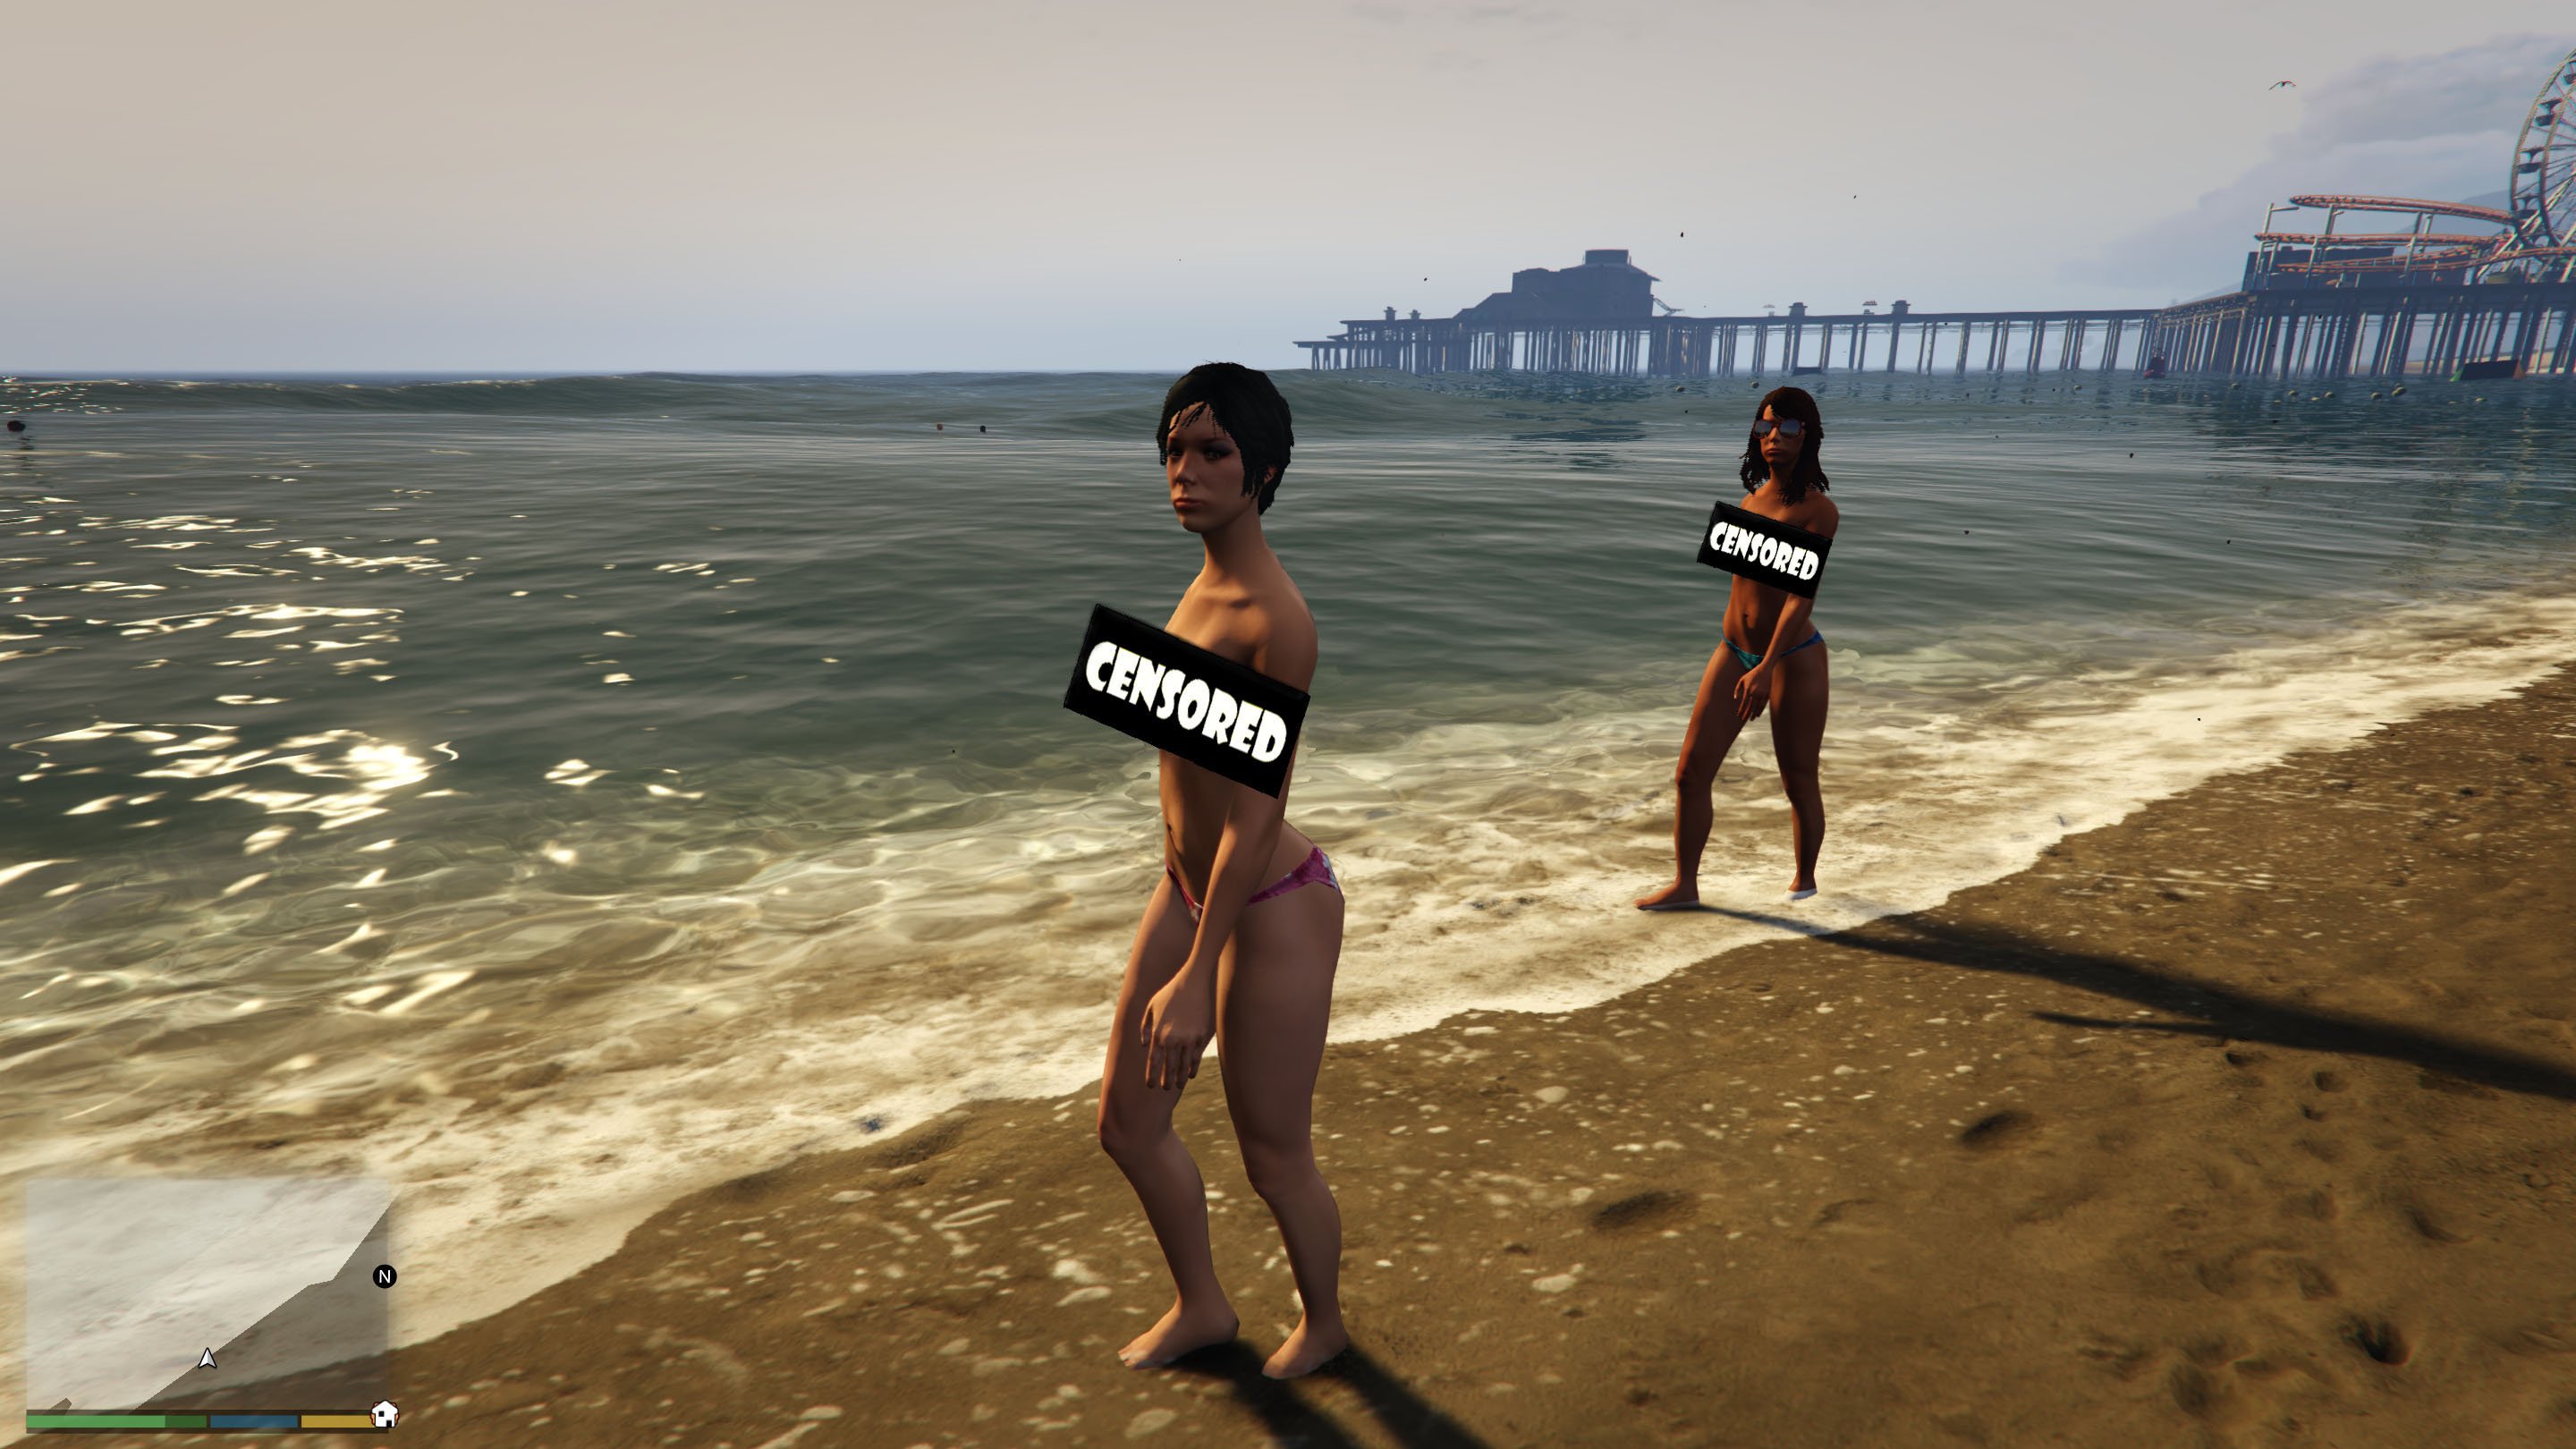 Nude Girls On The Beach Pics